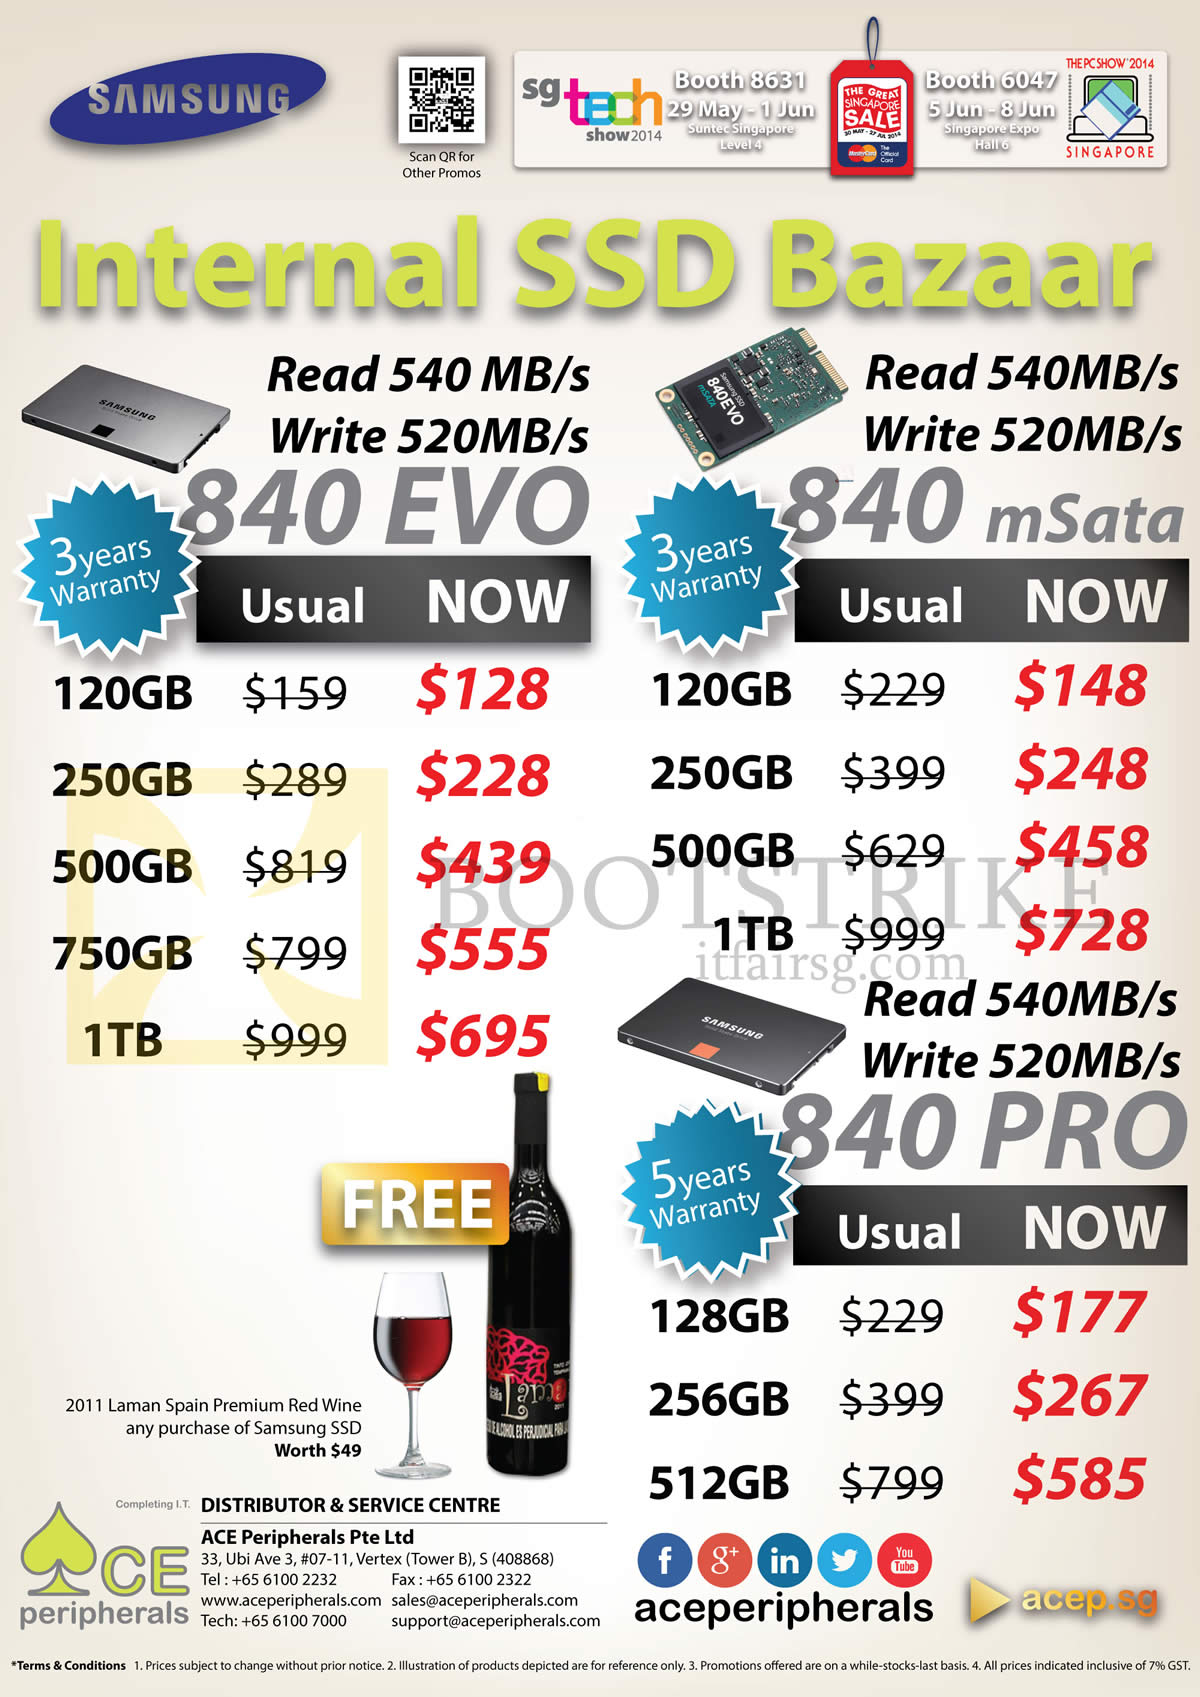 PC SHOW 2014 price list image brochure of ACE Peripherals Samsung Internal SSD Bazaar Samsung 840 EVO, 840 MSata, 840PRO